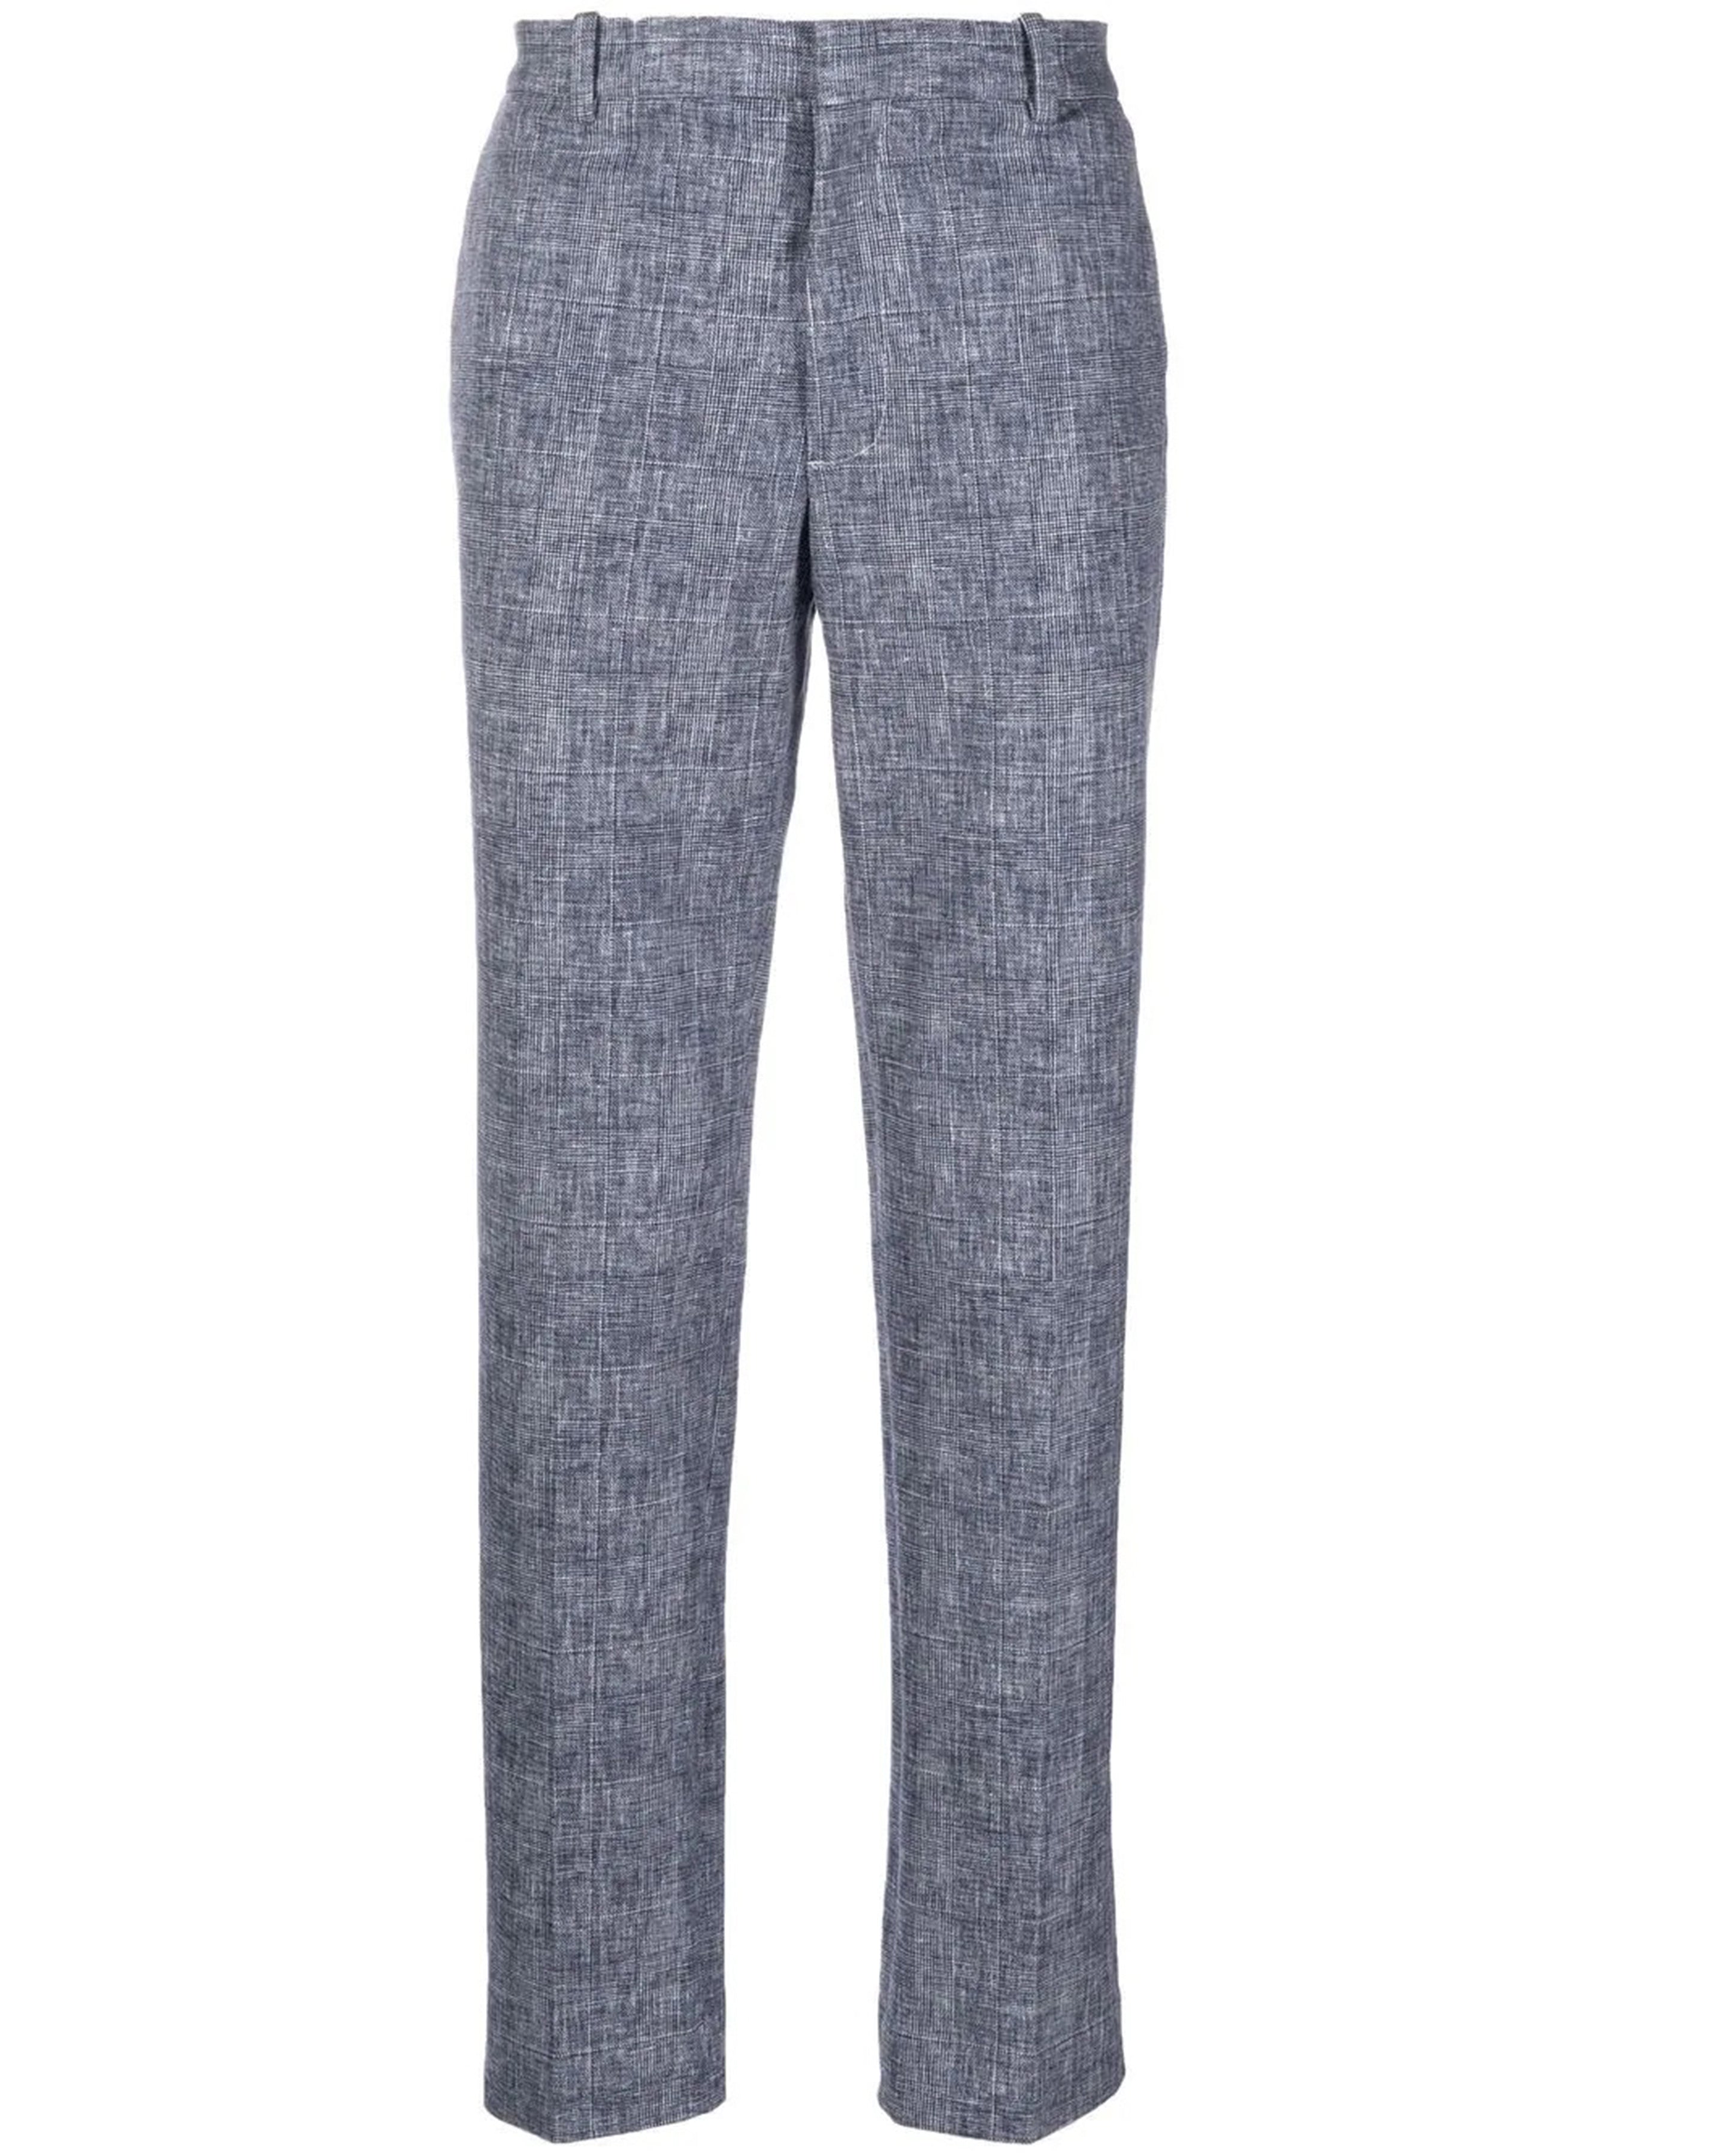 CIRCOLO 1901 - Blue Check Cotton Stretch Trousers CN3948